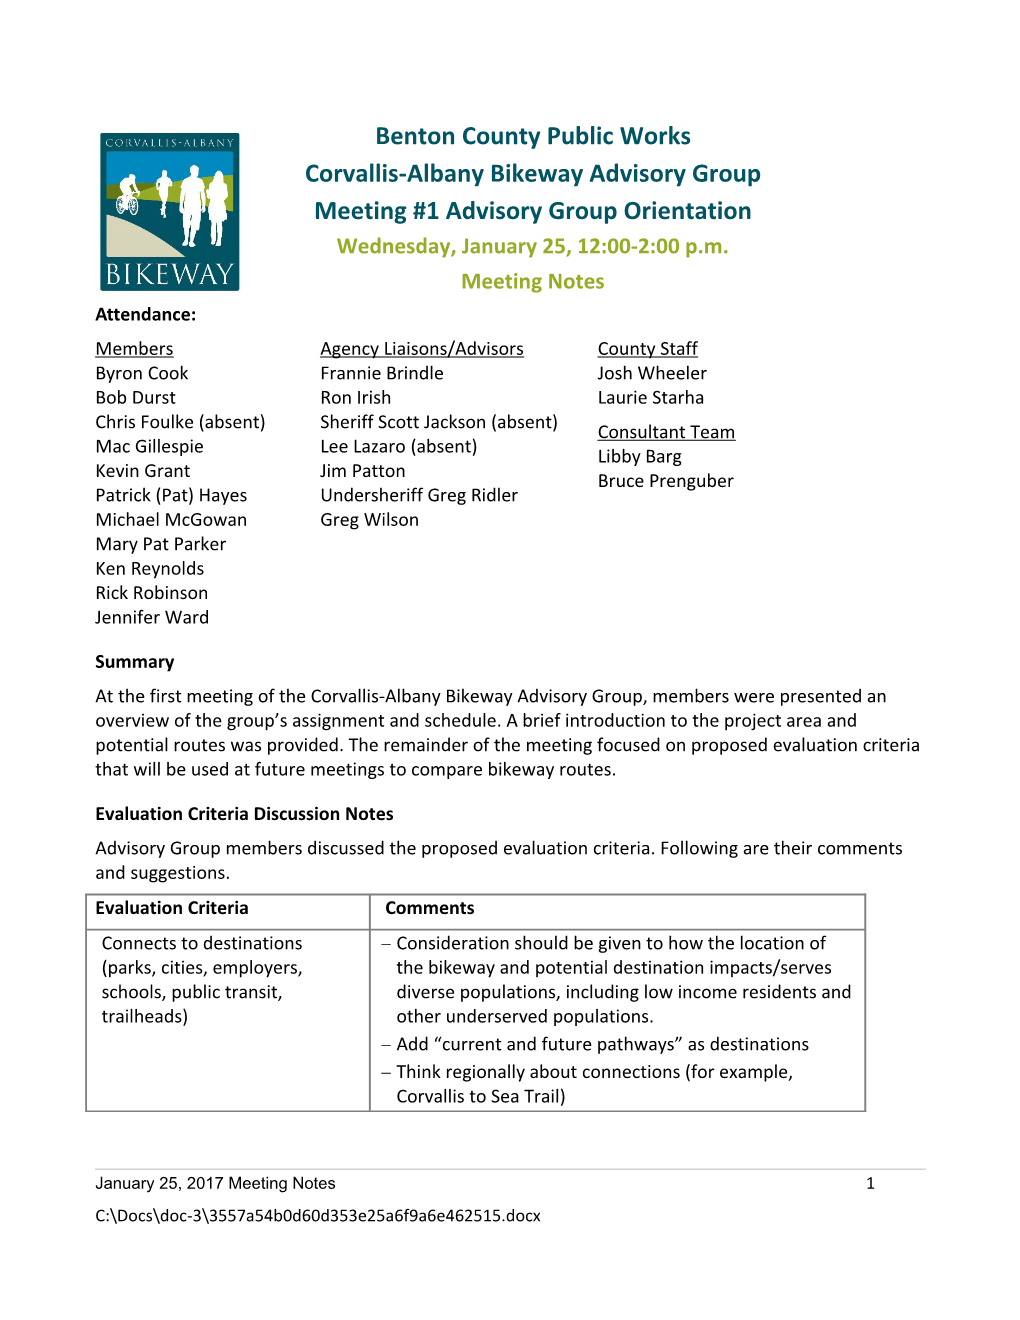 Corvallis-Albany Bikeway Advisory Group